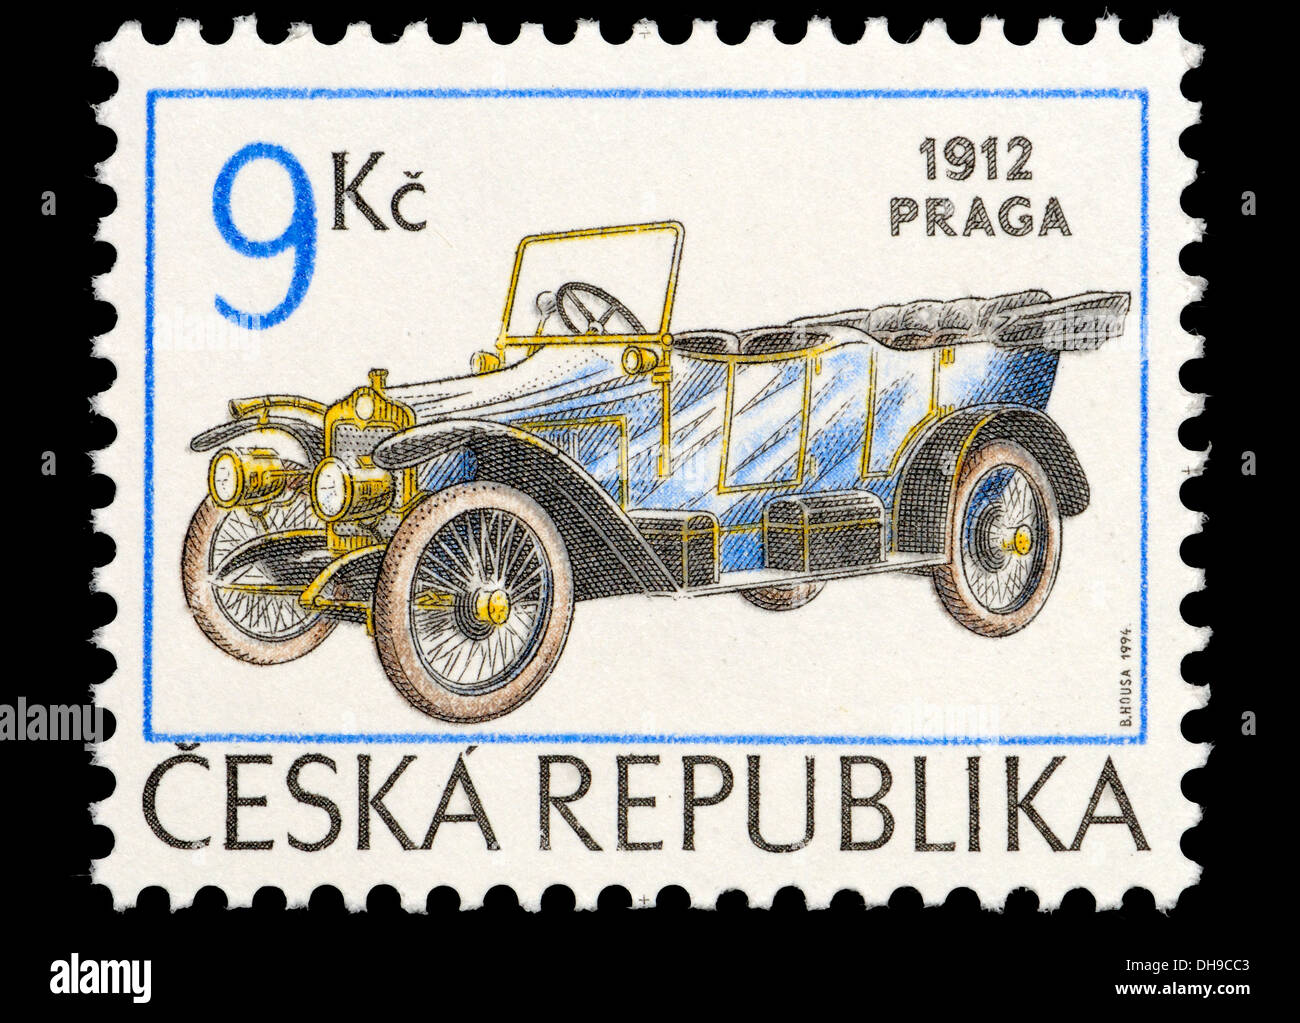 Czech Republic postage stamp: Praga Grand (1912) car Stock Photo